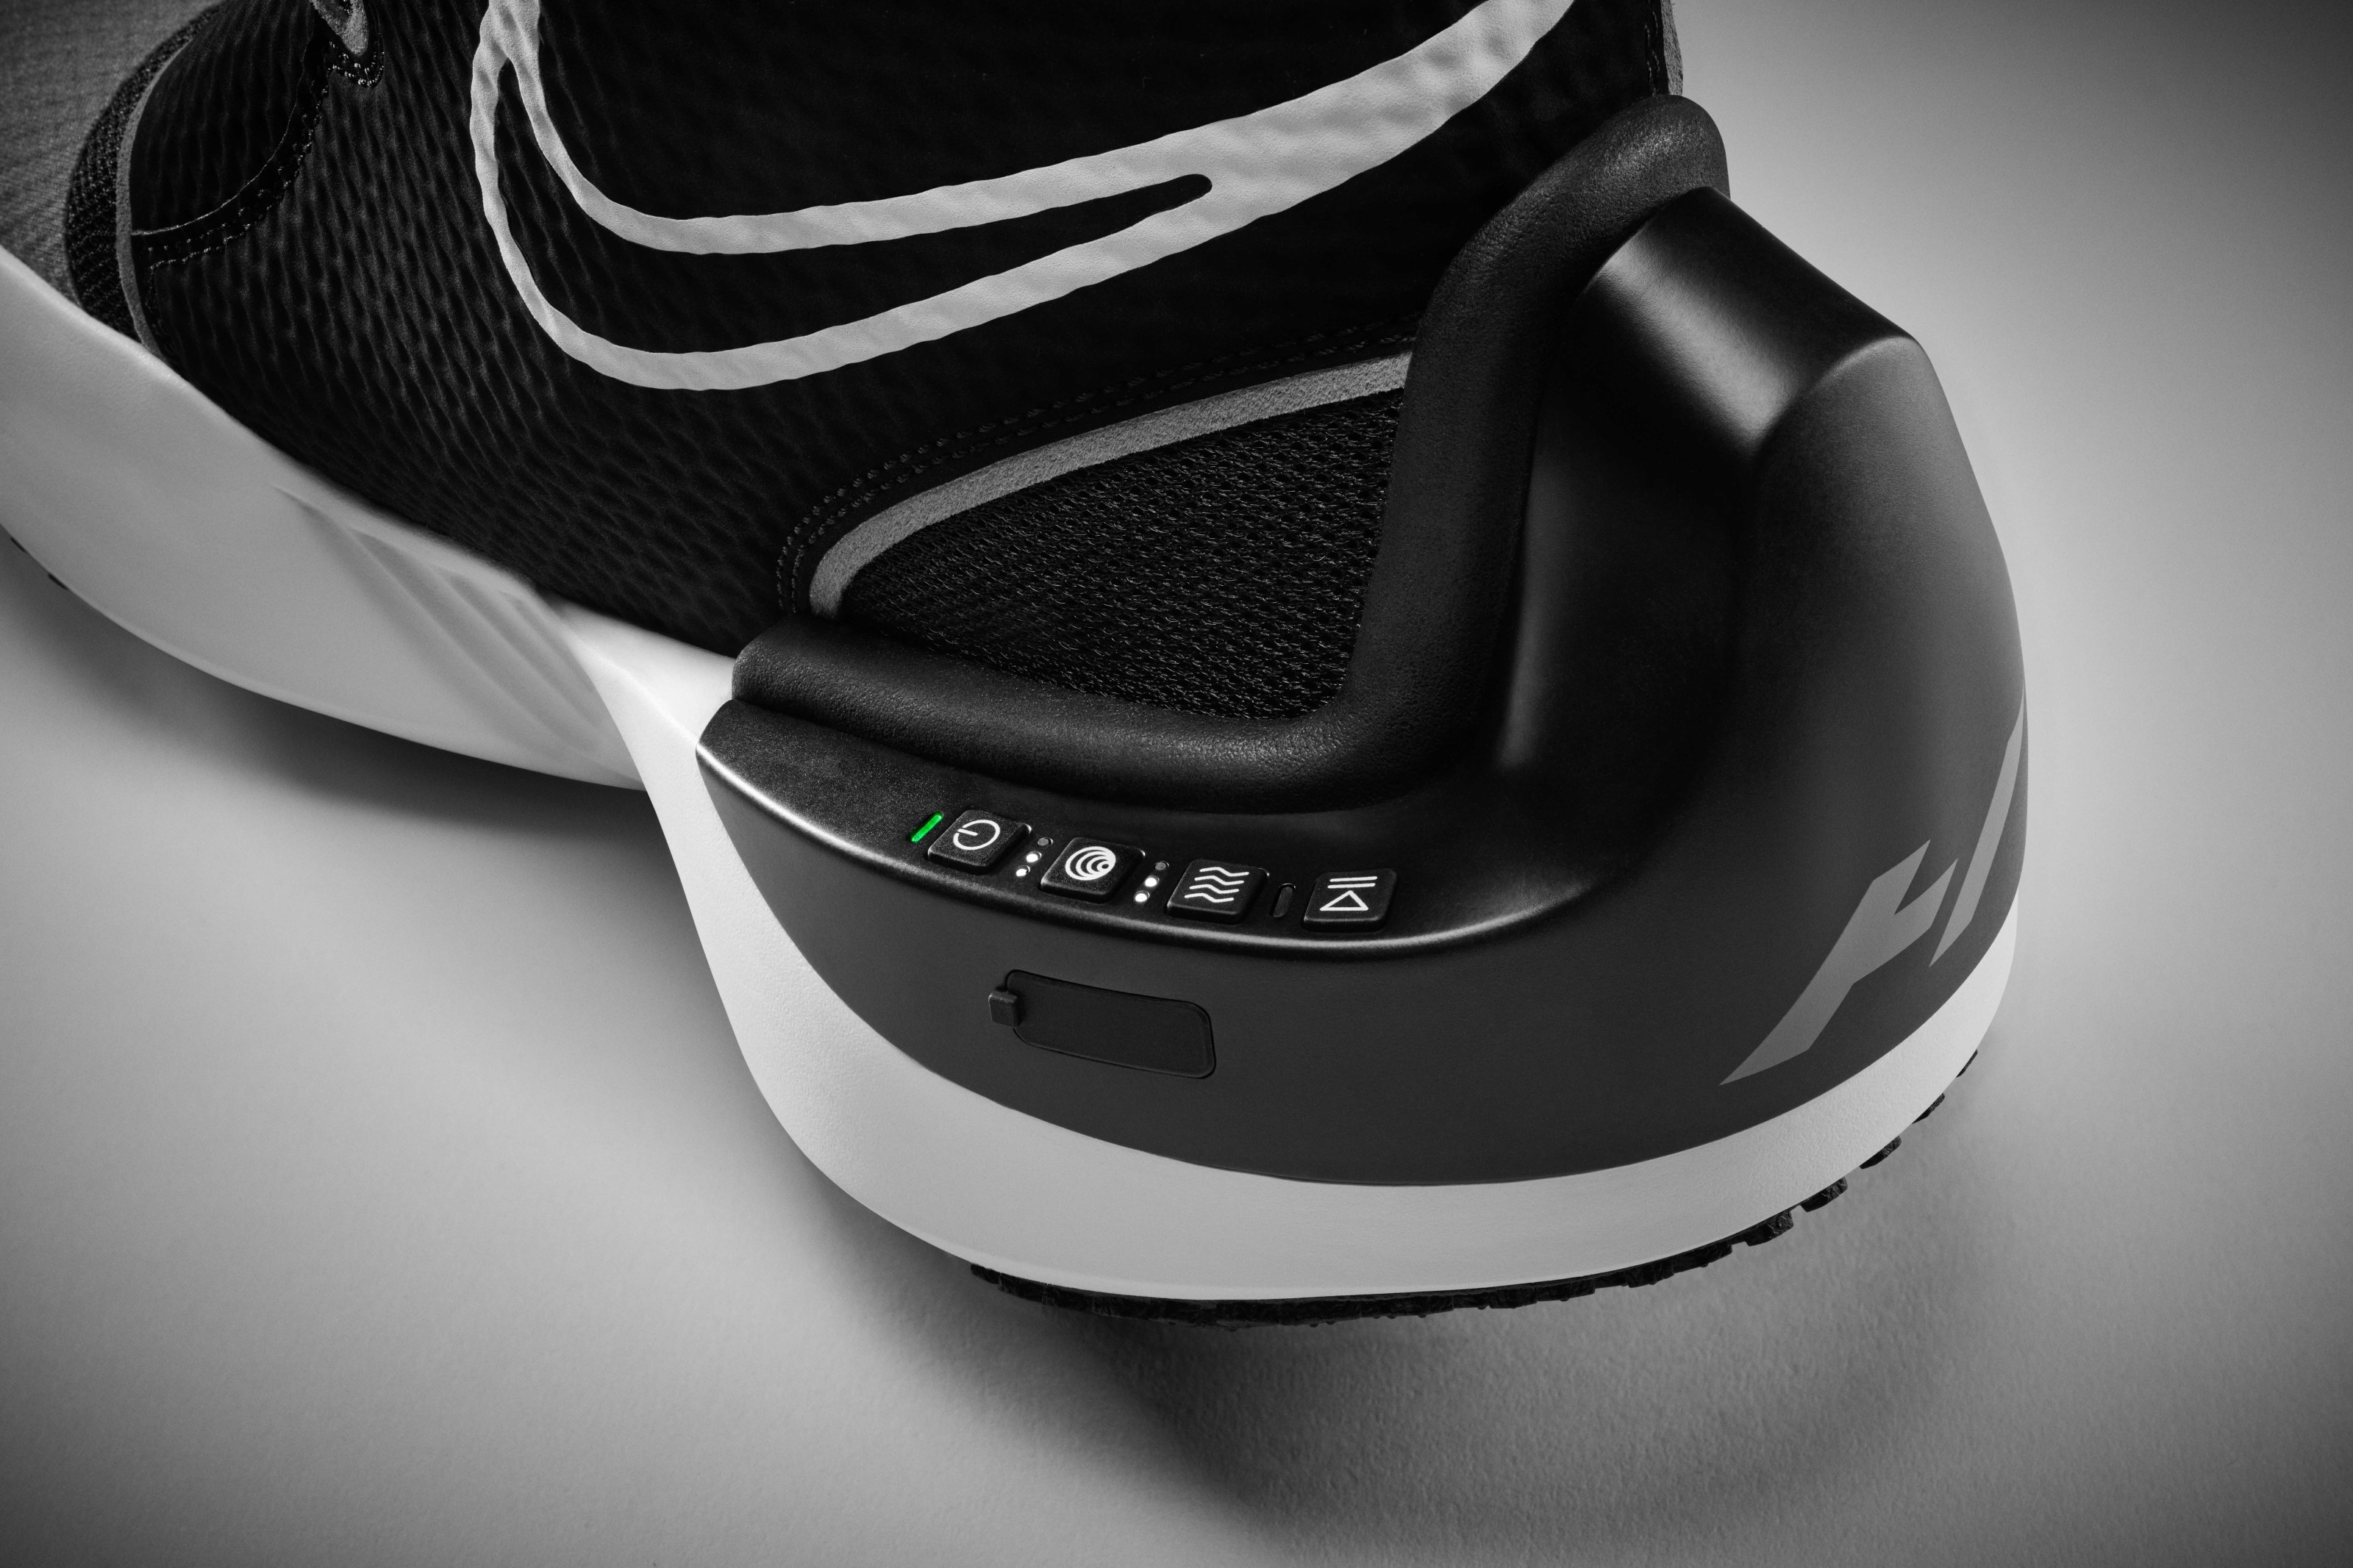 Nike x Hyperice